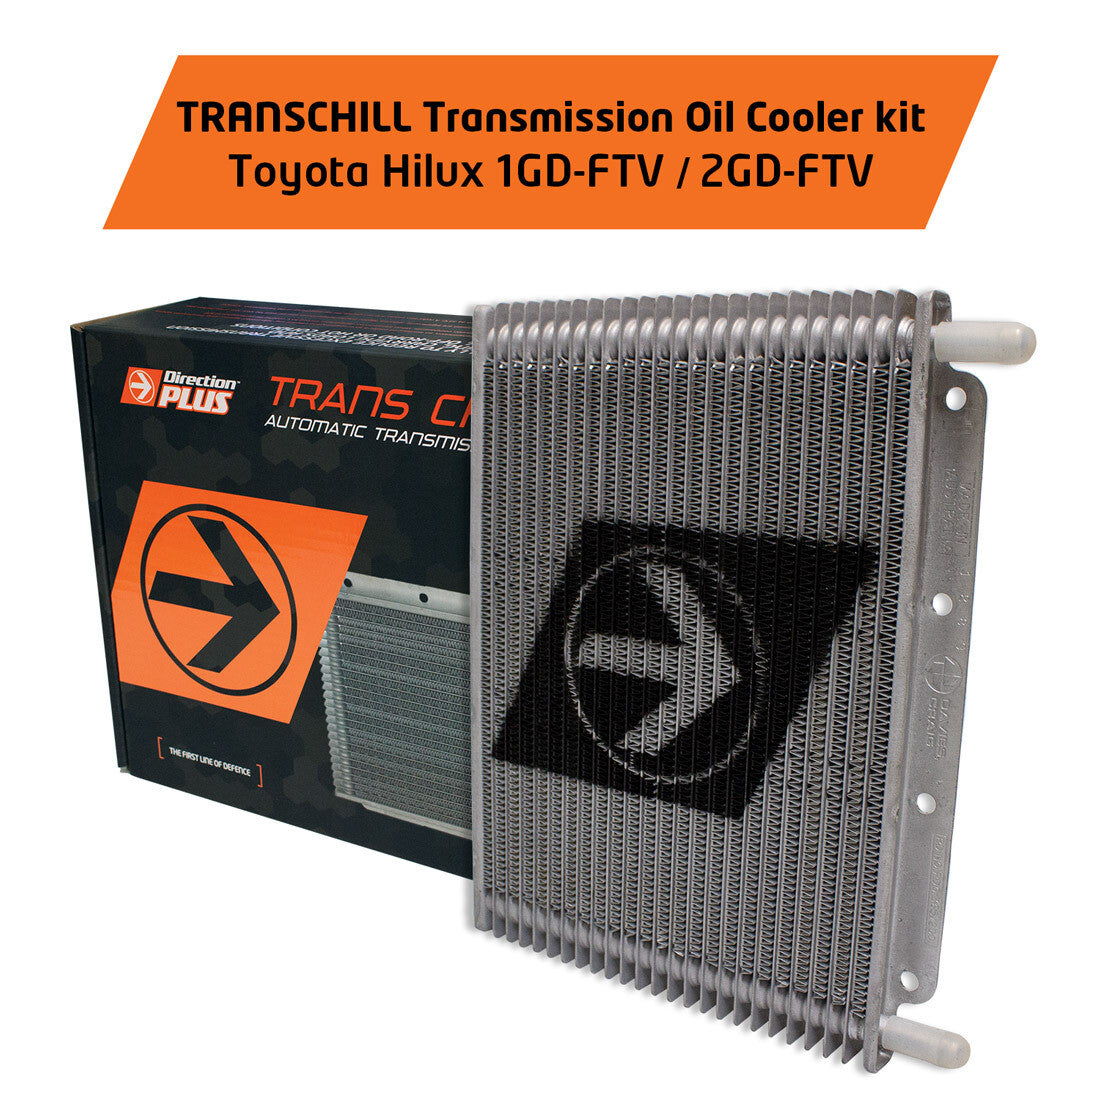 Transchill Transmission Cooler Kit - Toyota Hilux N80